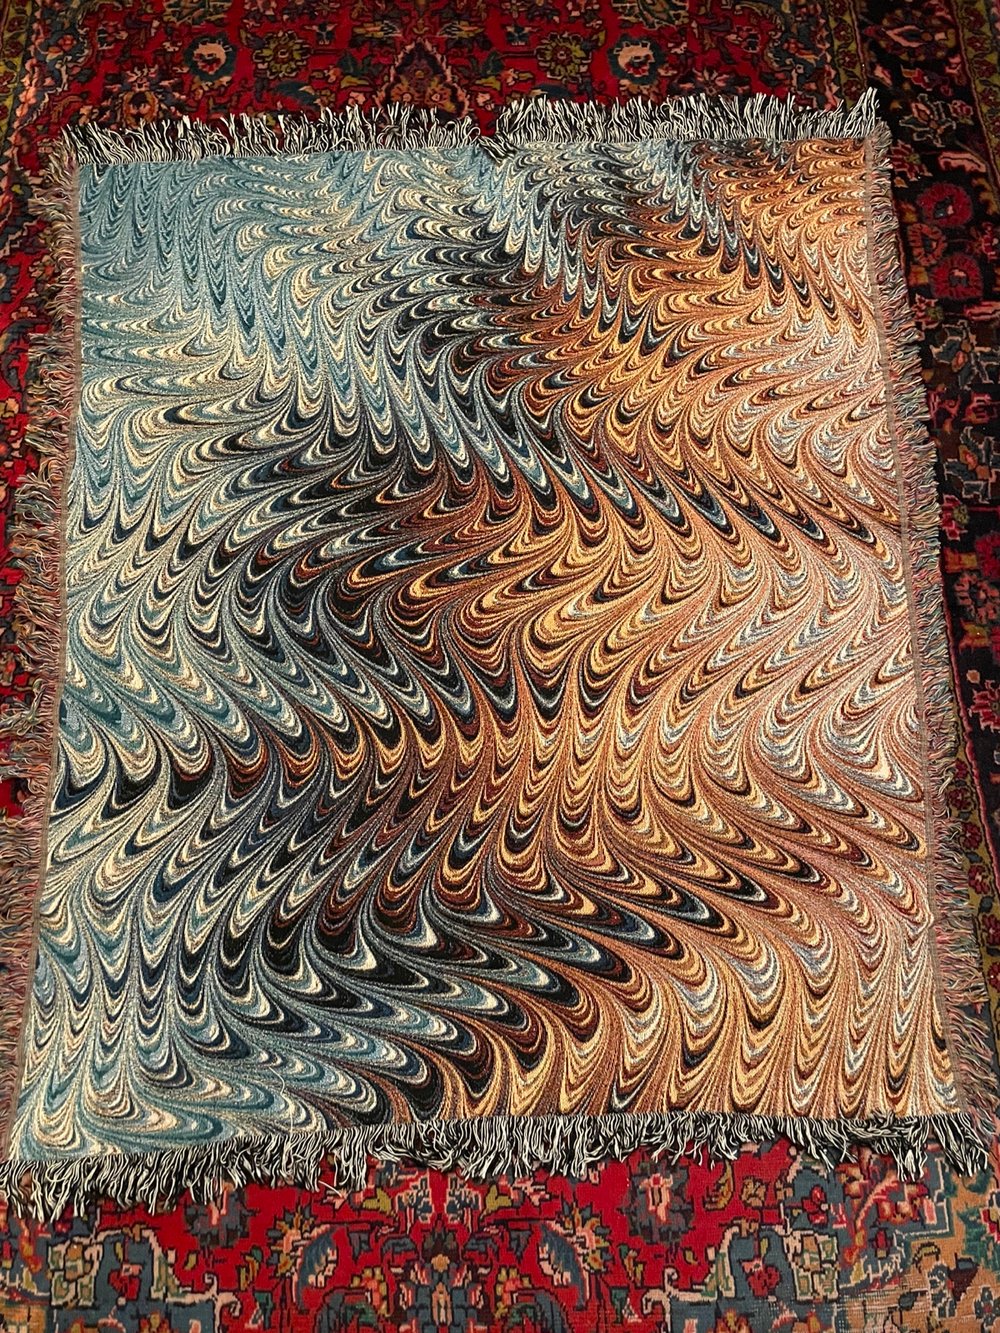 Woven Blanket #34